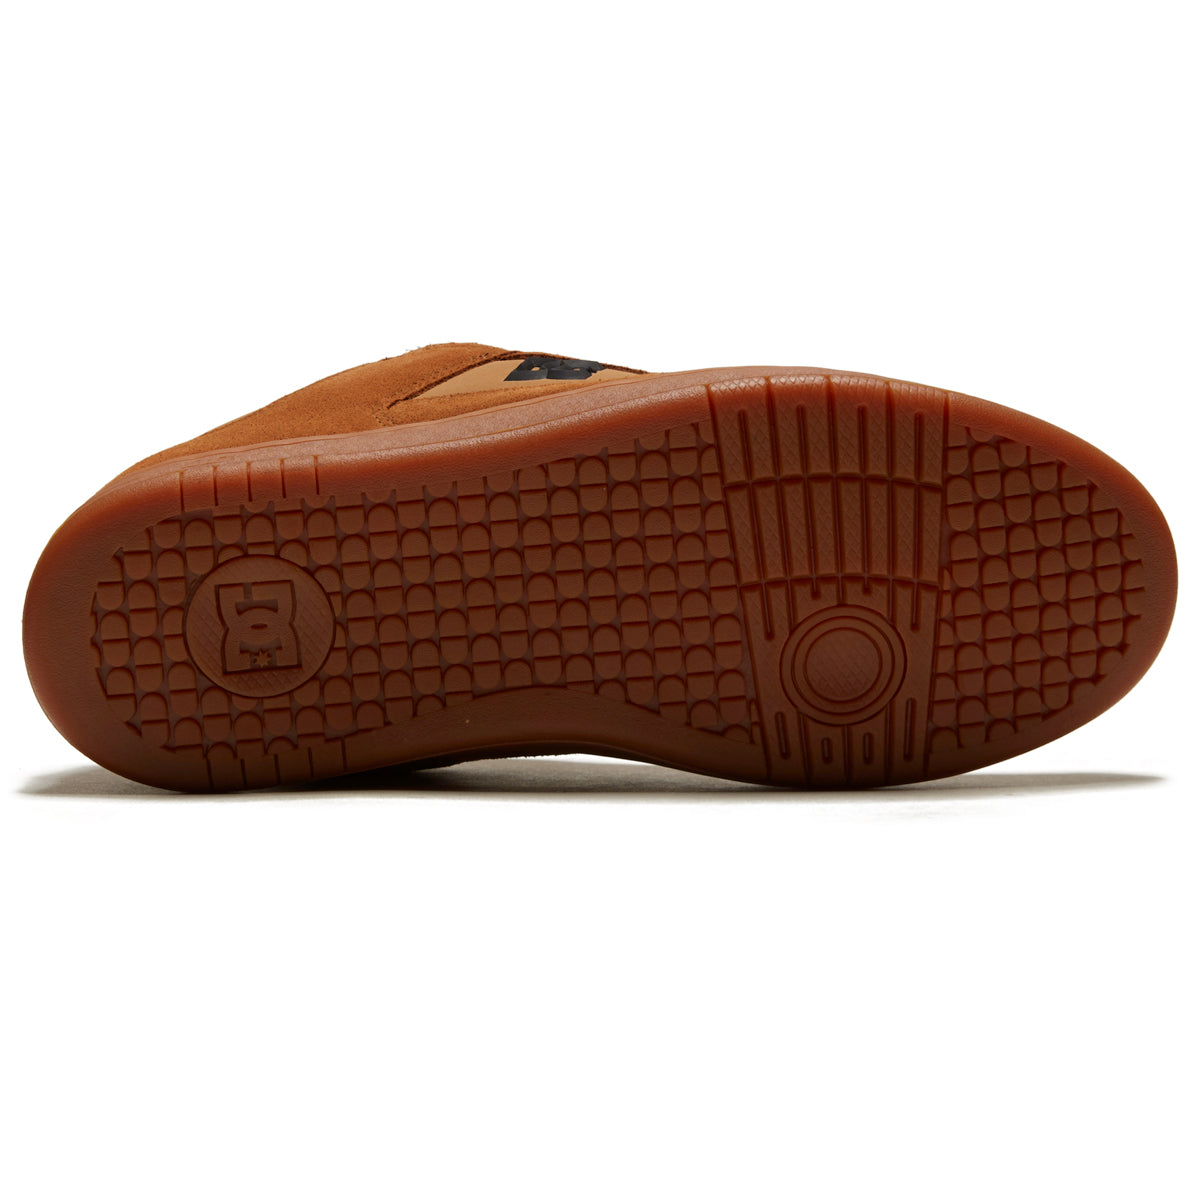 DC Manteca 4 S Shoes - Brown/Tan image 4